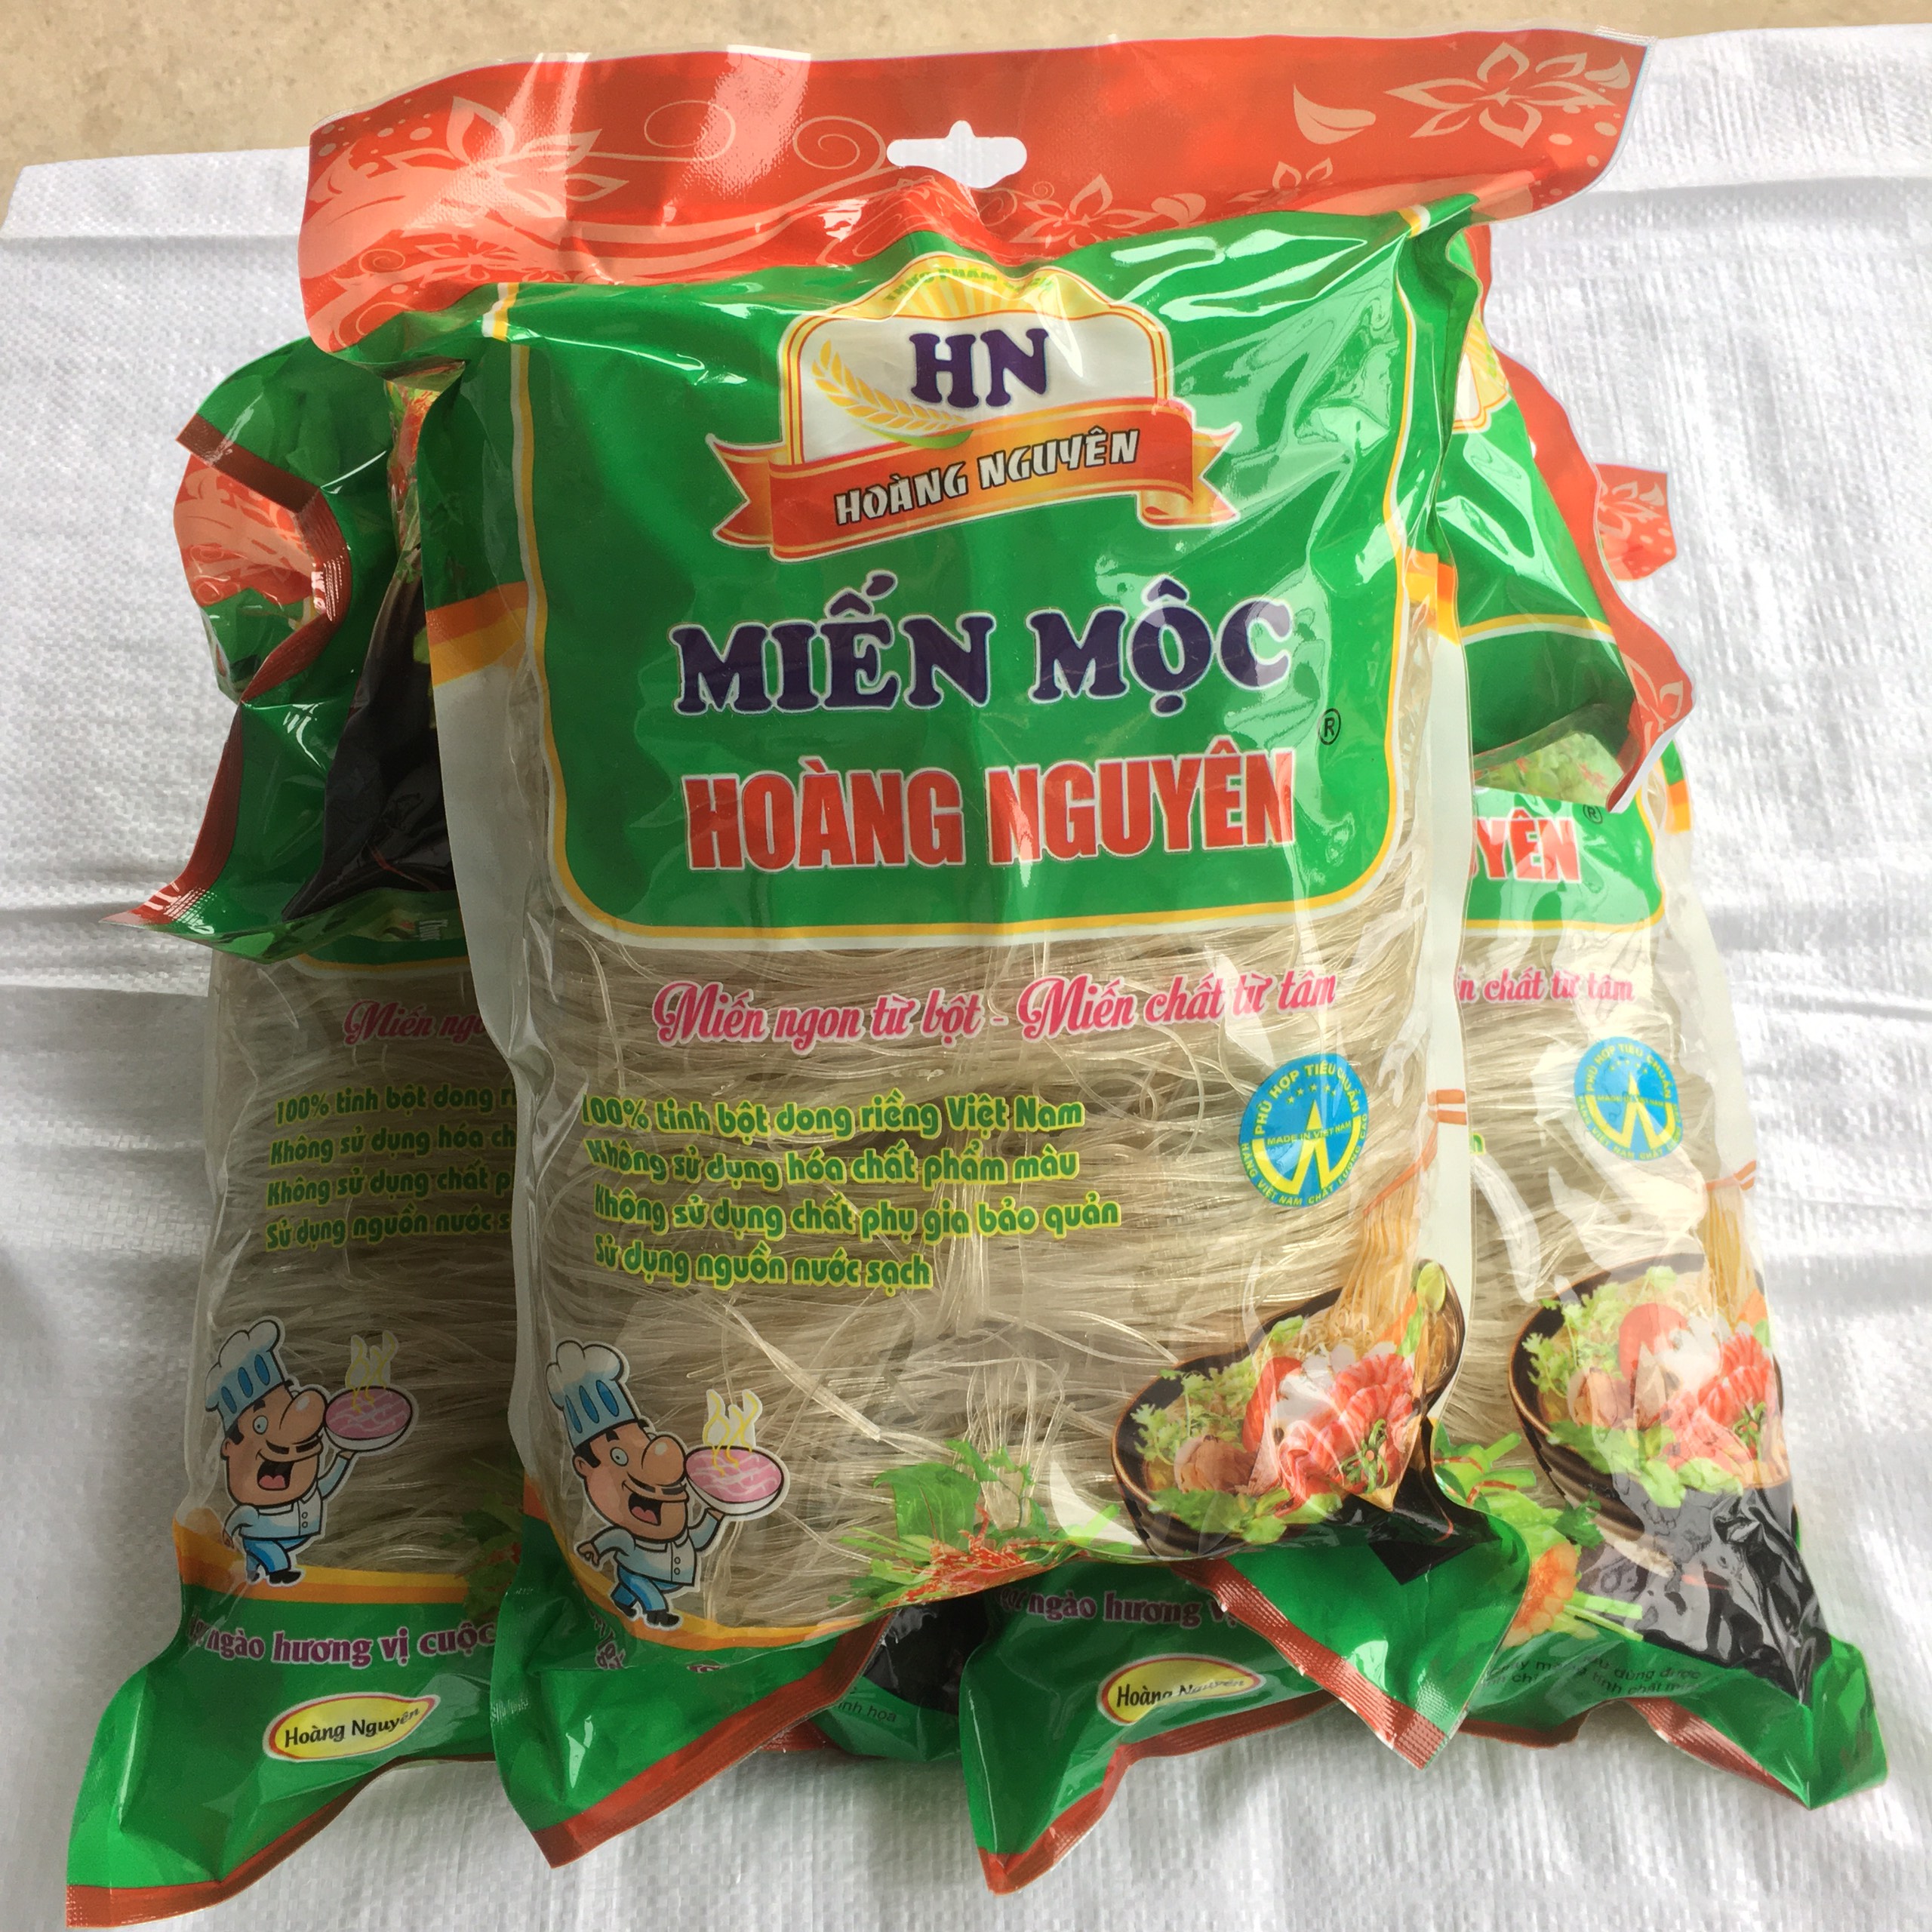 Vermicelli Hot Deal Arrowroot Vermicelli Powder Food OCOP Bag Vietnam Manufacturer